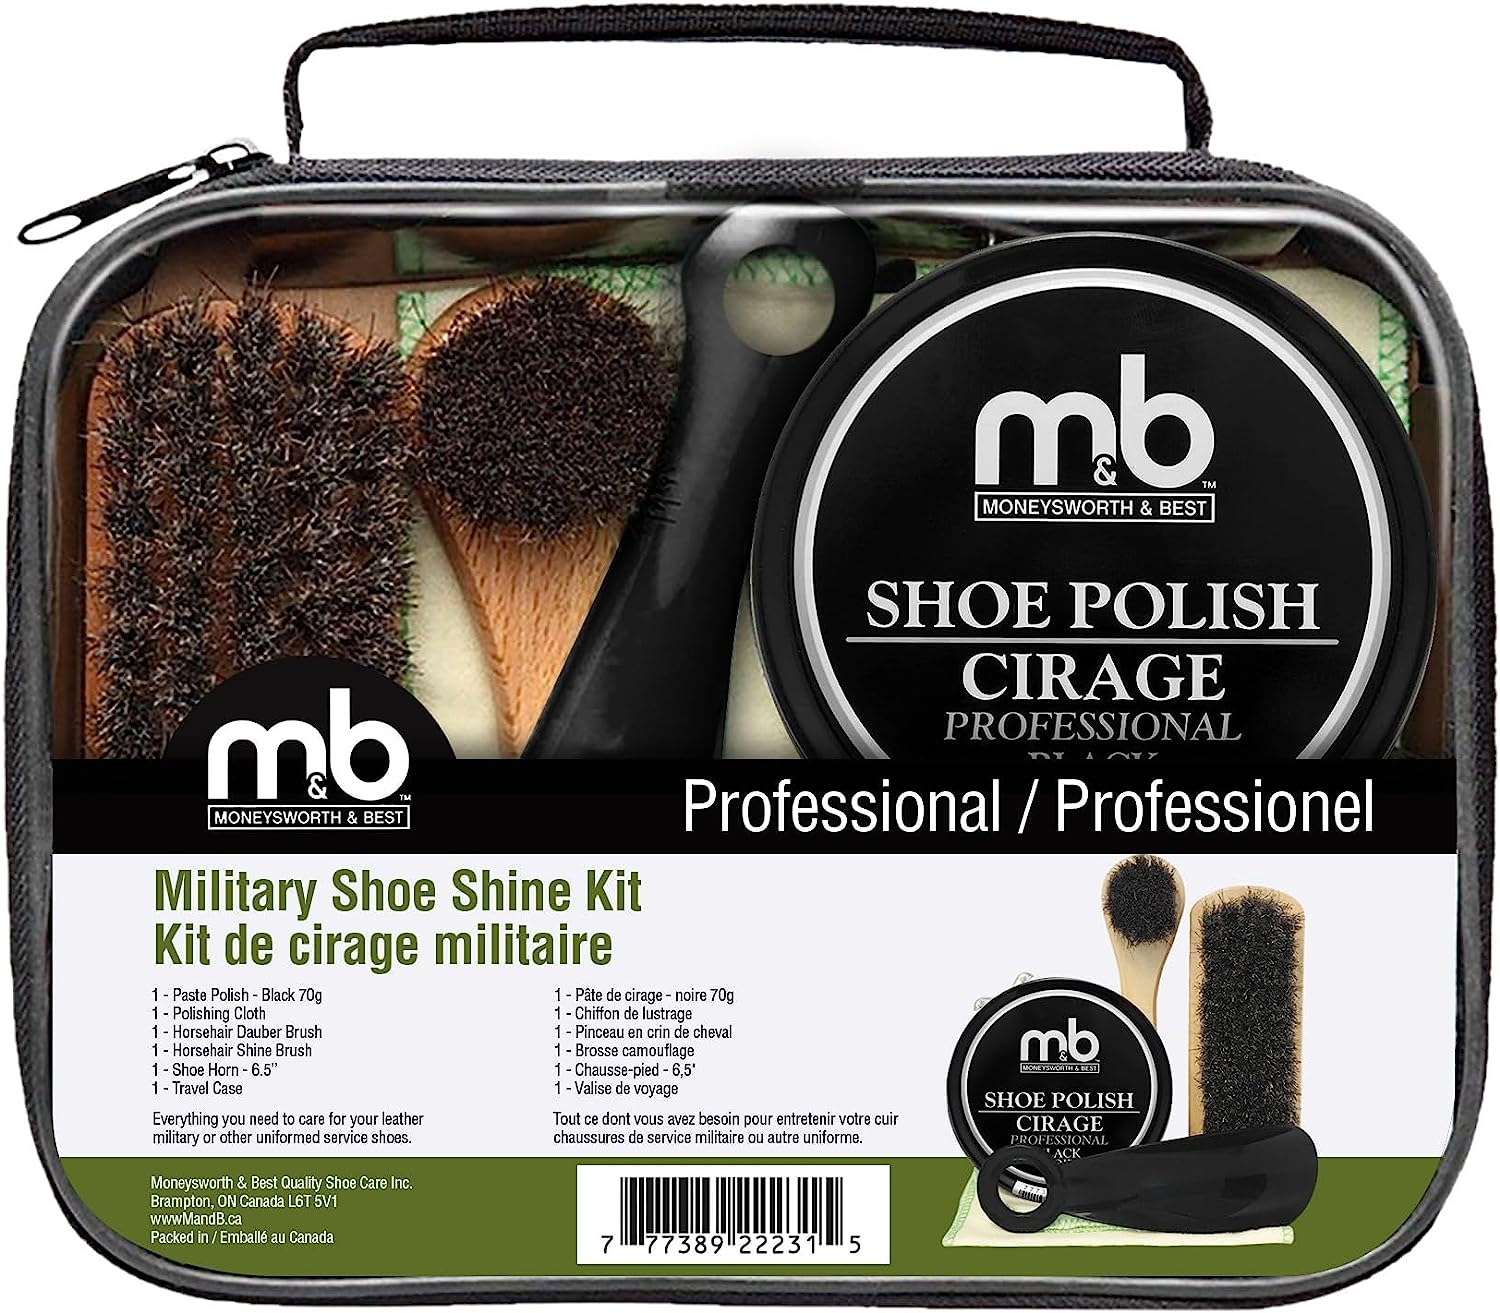 Moneysworth & Best Military Shoe Shine Kit - 5 piece set